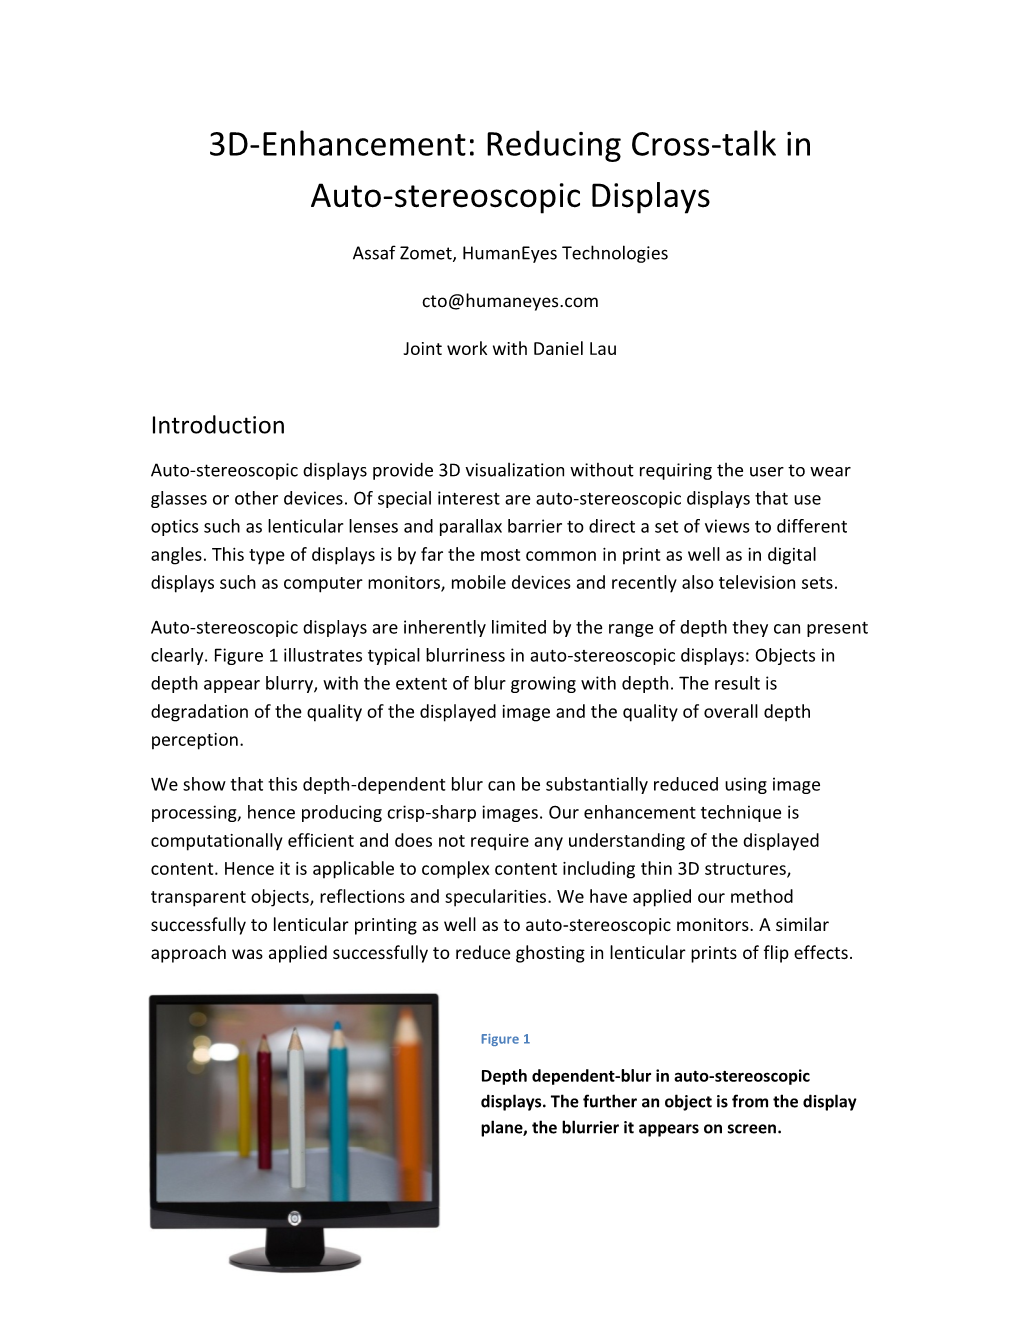 3D-Enhancement: Reducing Cross-Talk in Auto-Stereoscopic Displays